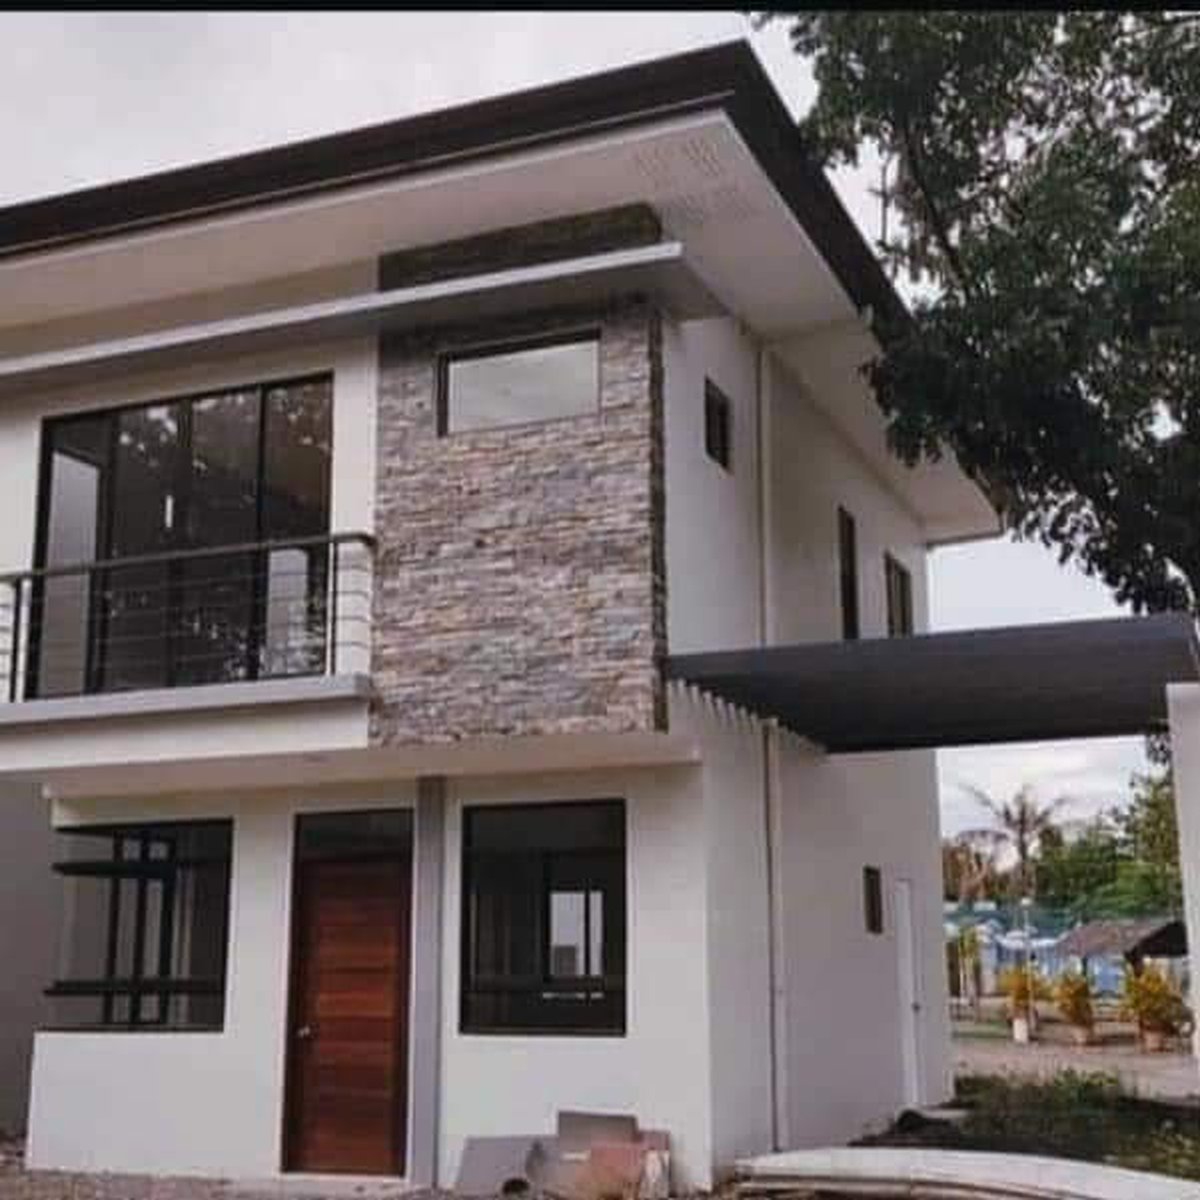 4-bedroom Single Attached House For Sale in Lapu-Lapu (Opon) Cebu